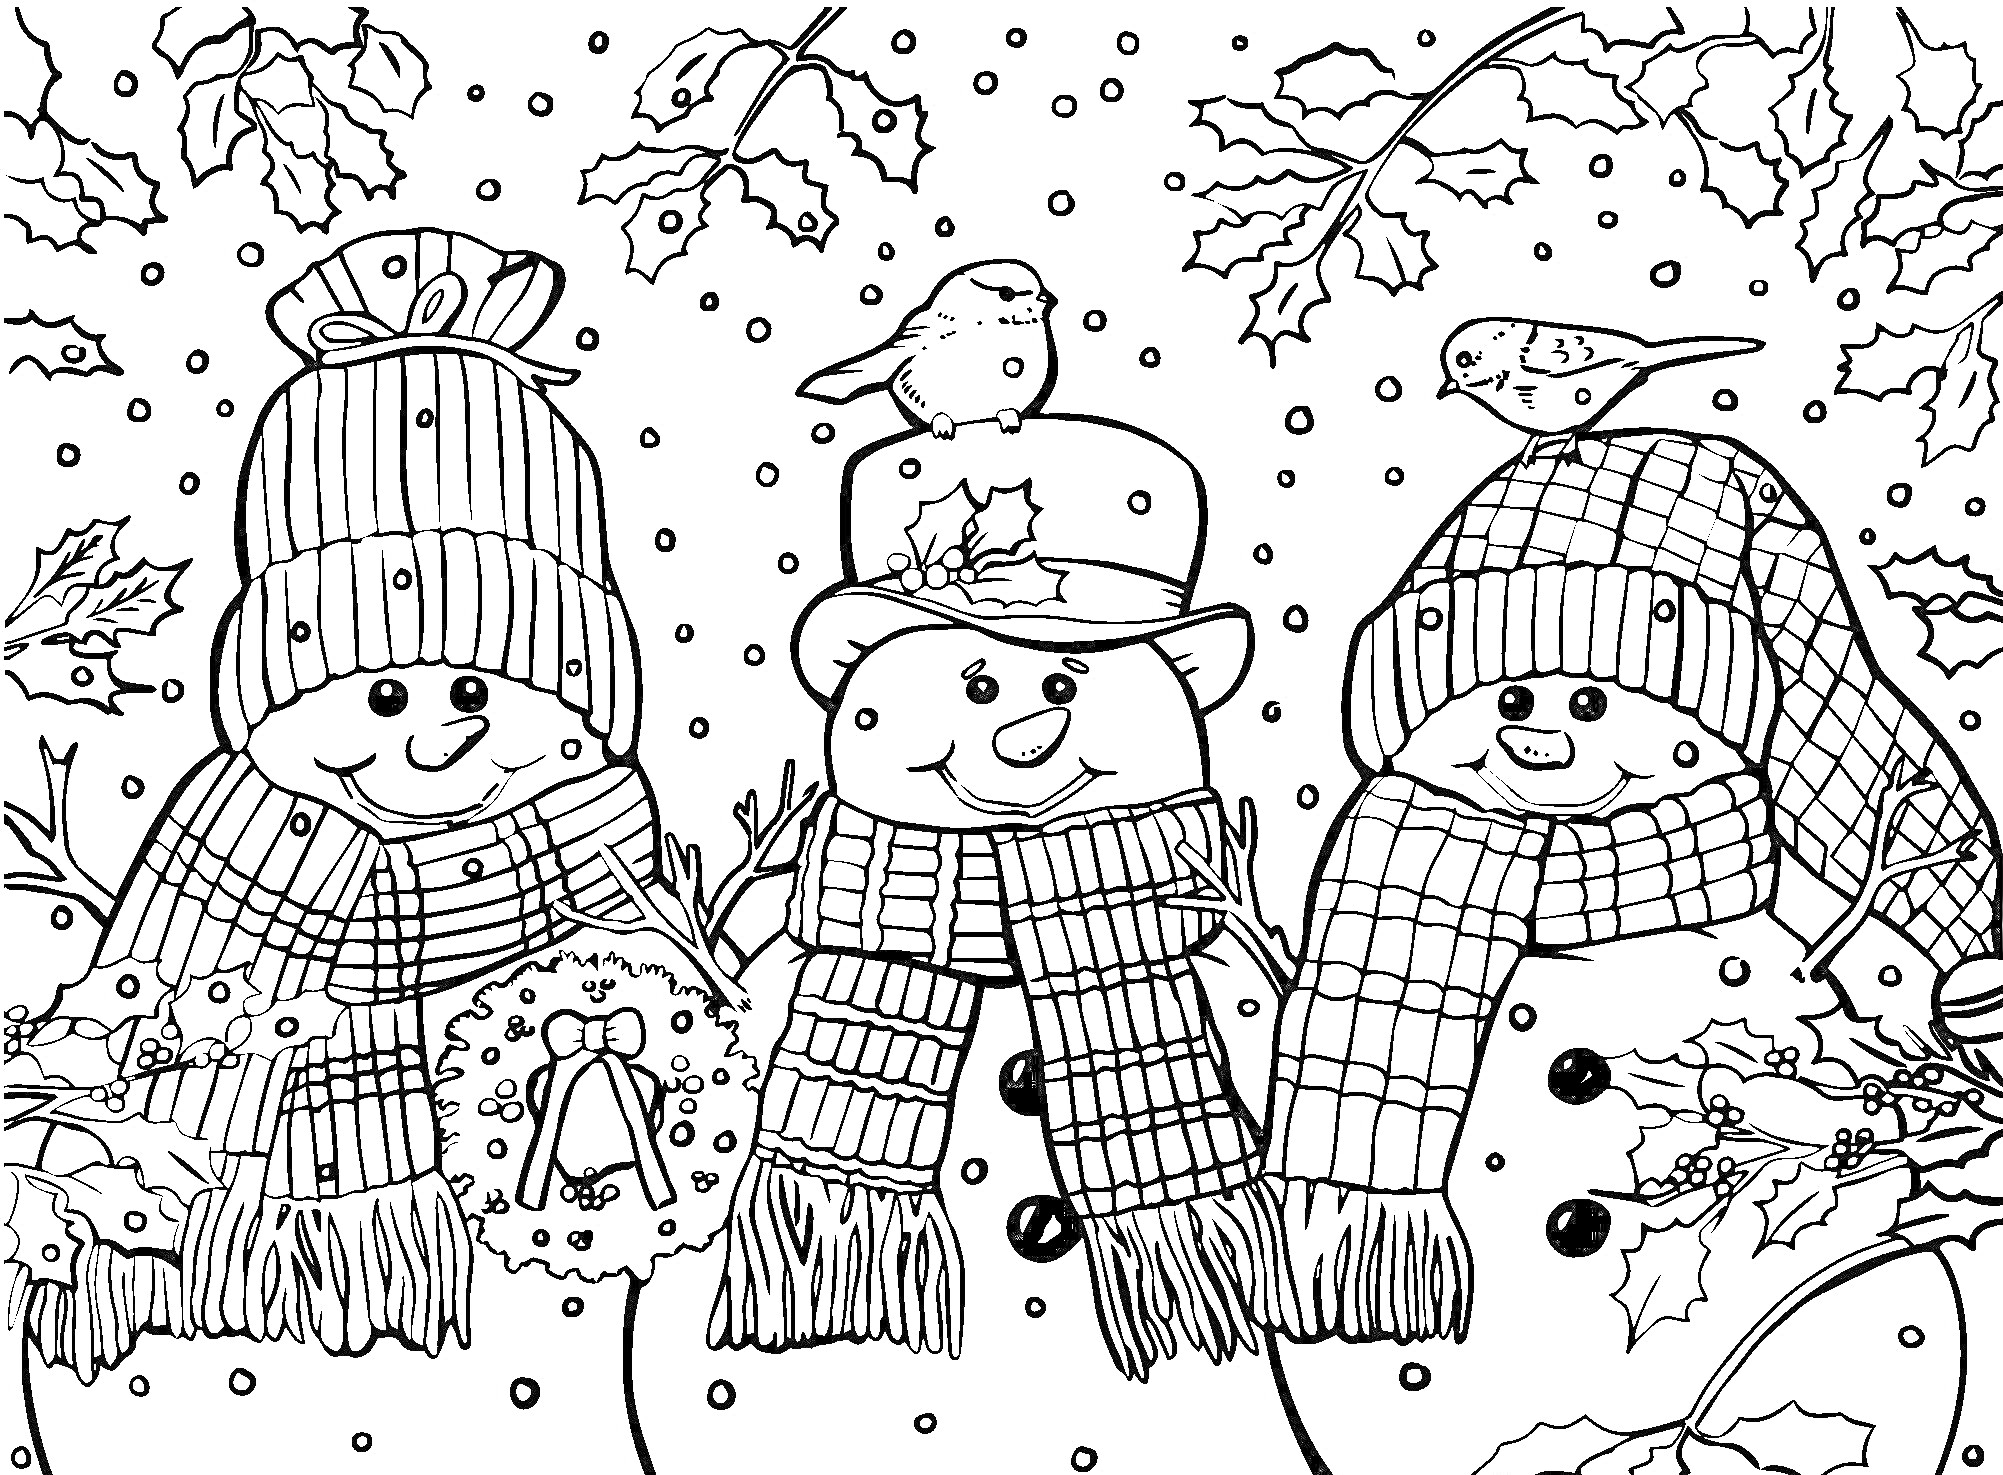 Раскраска Три снеговика в шапках и шарфах, с птицами, листочками и снежинками на фоне